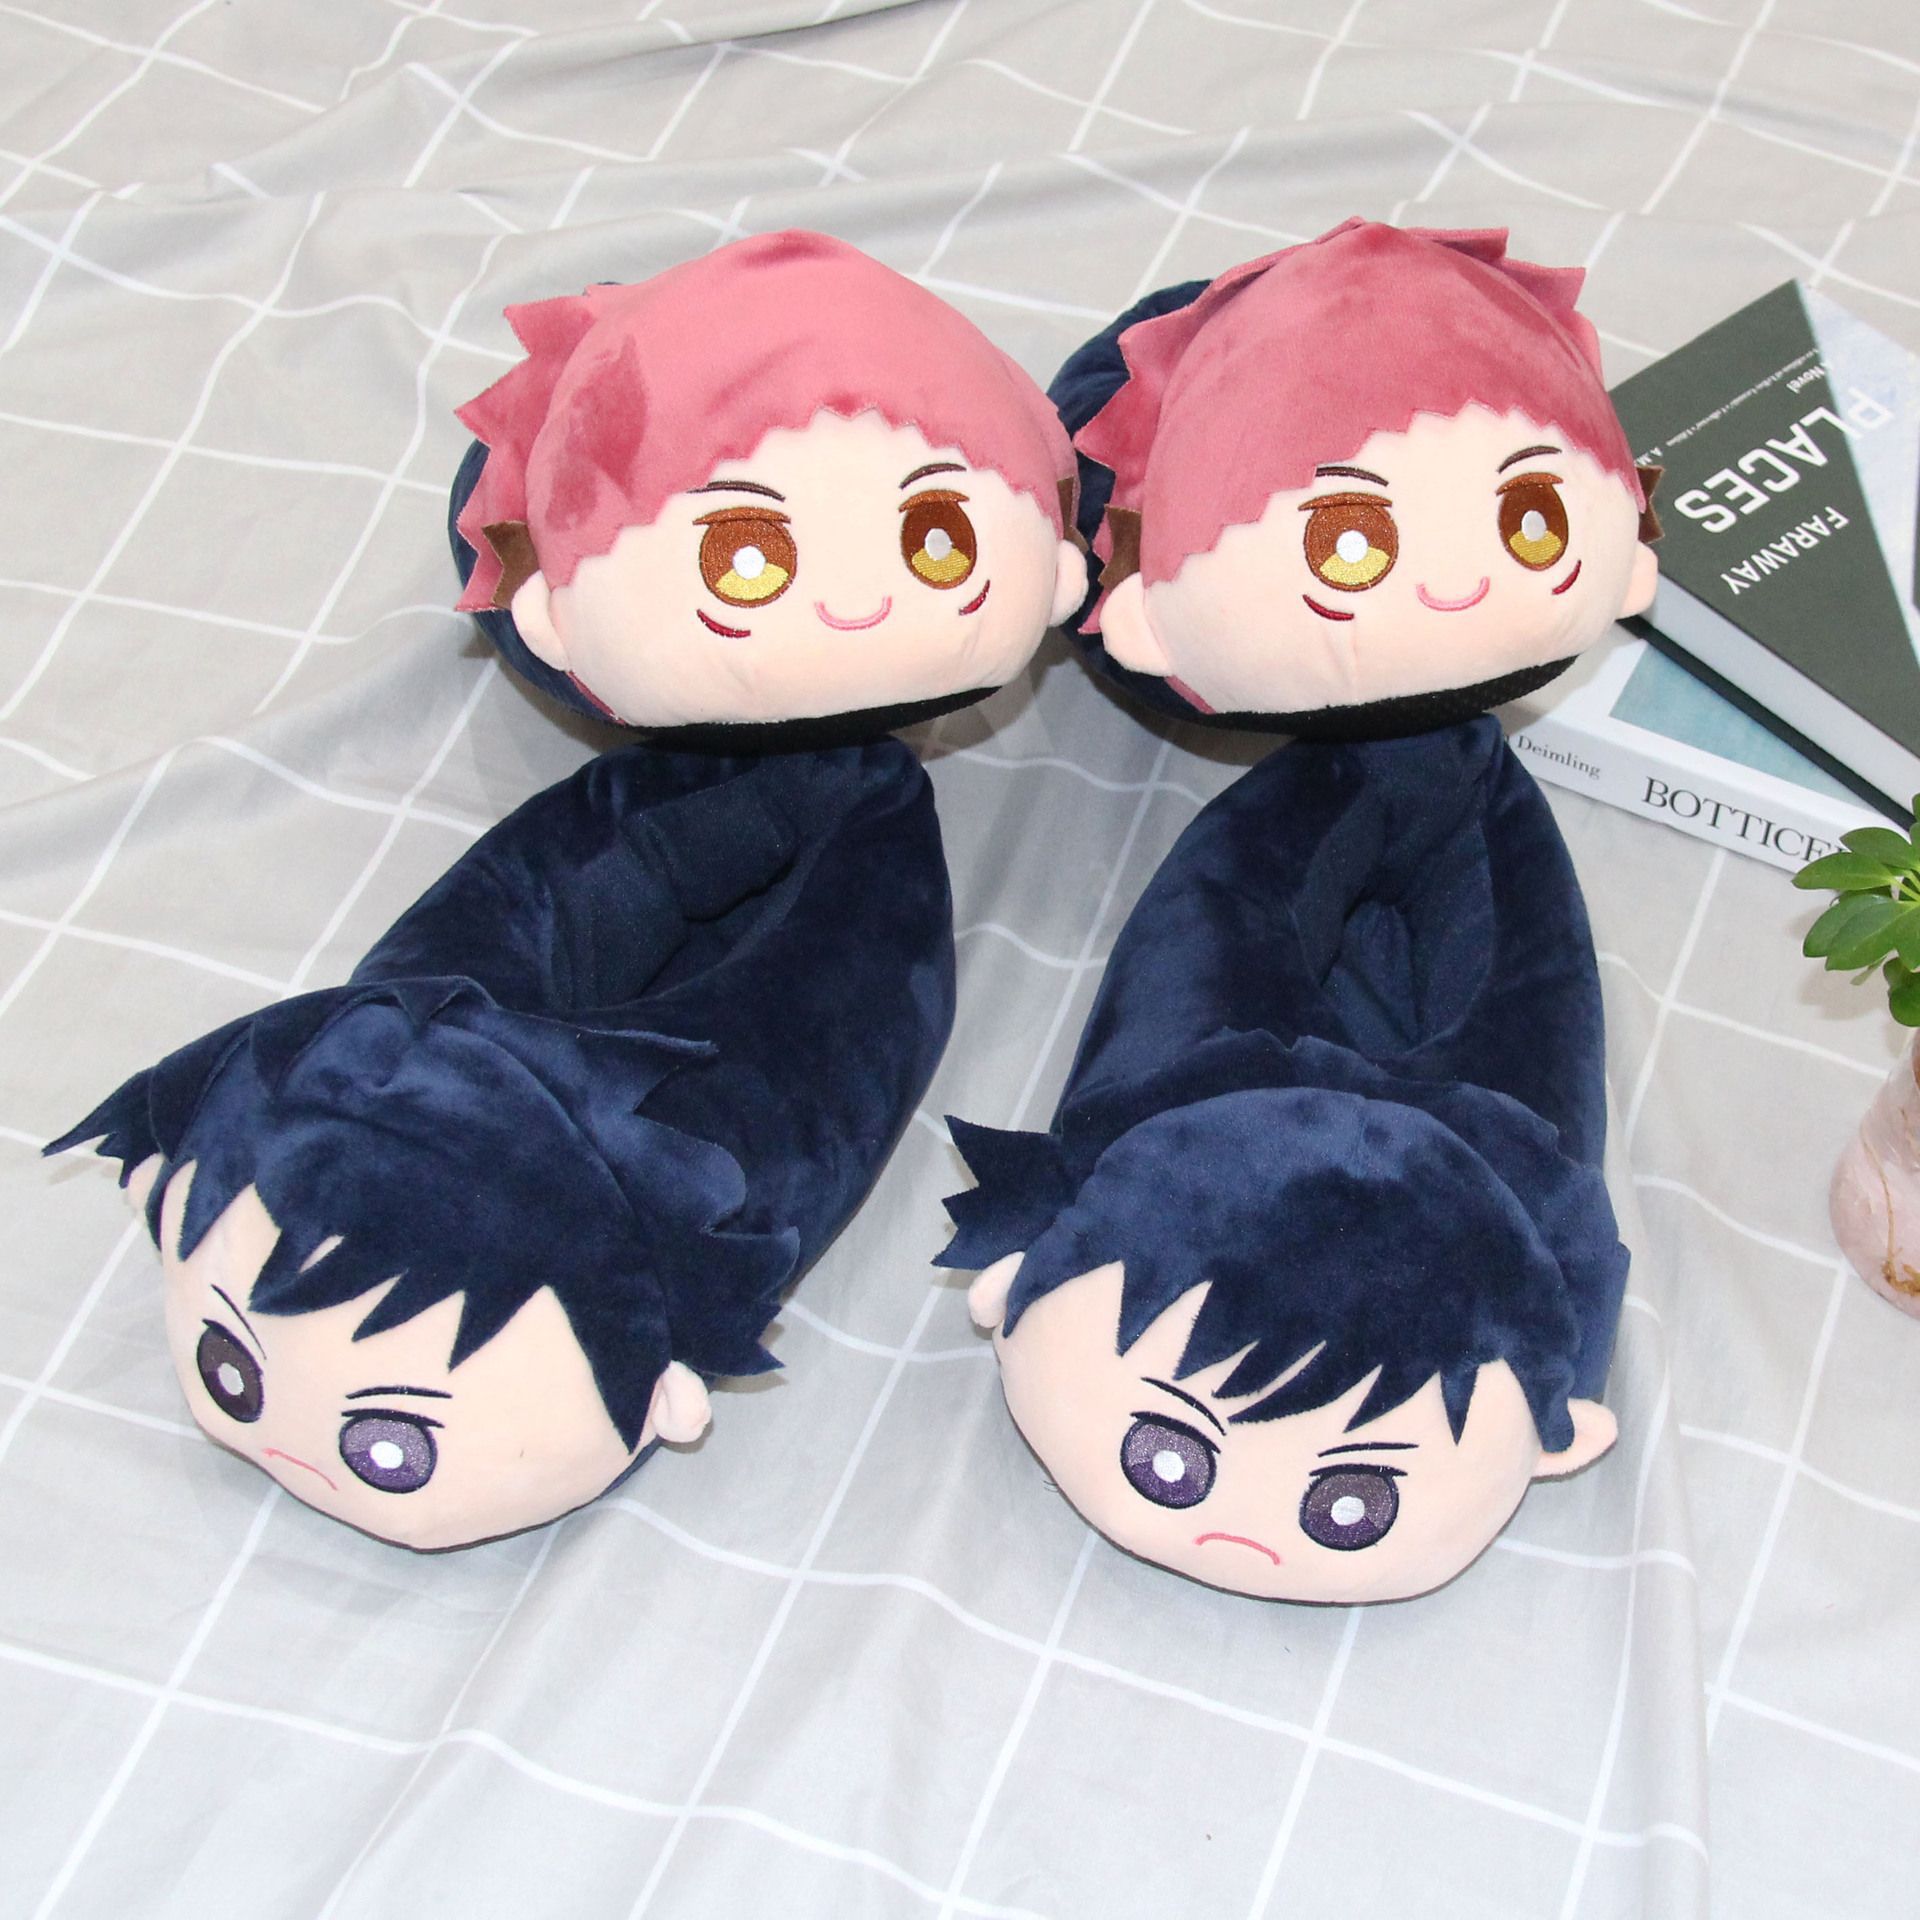 Jujutsu Kaisen – Megumi and Itadori Themed Cute Plush Slippers (2 Designs) Shoes & Slippers